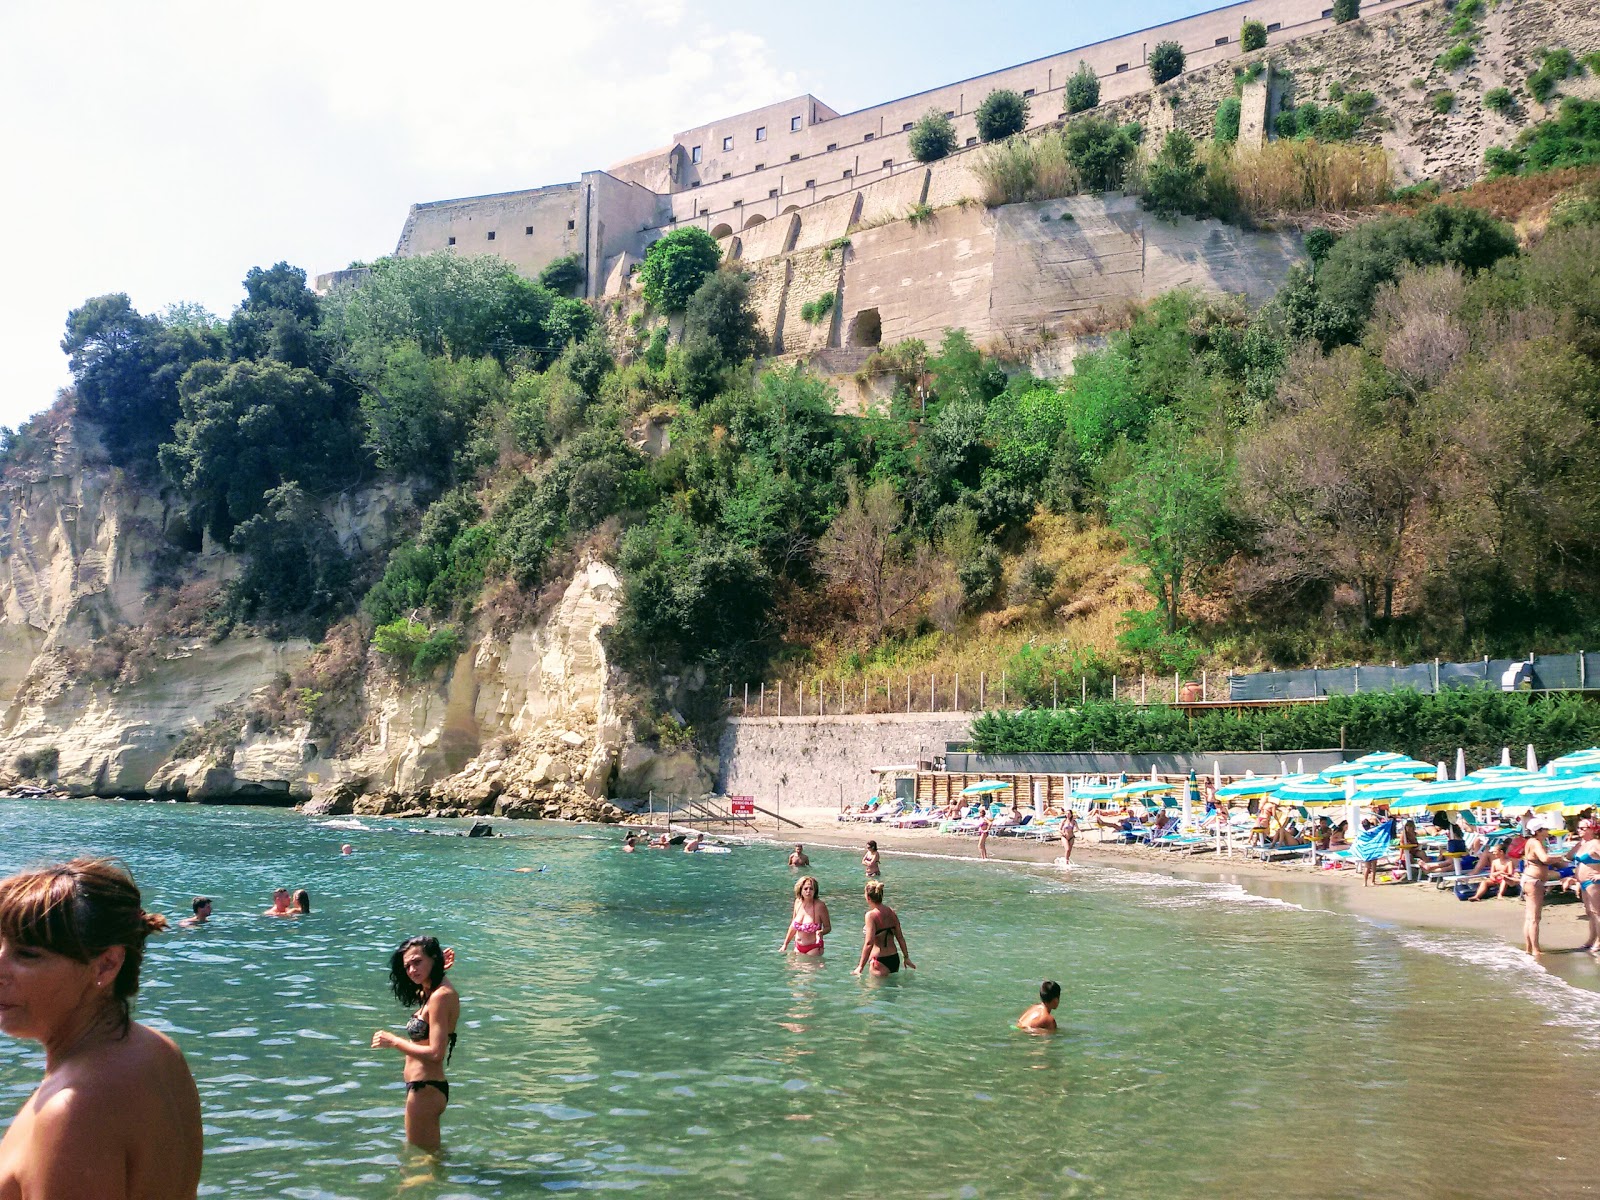 Fotografija Spiaggia del Castello di Baia z modra voda površino